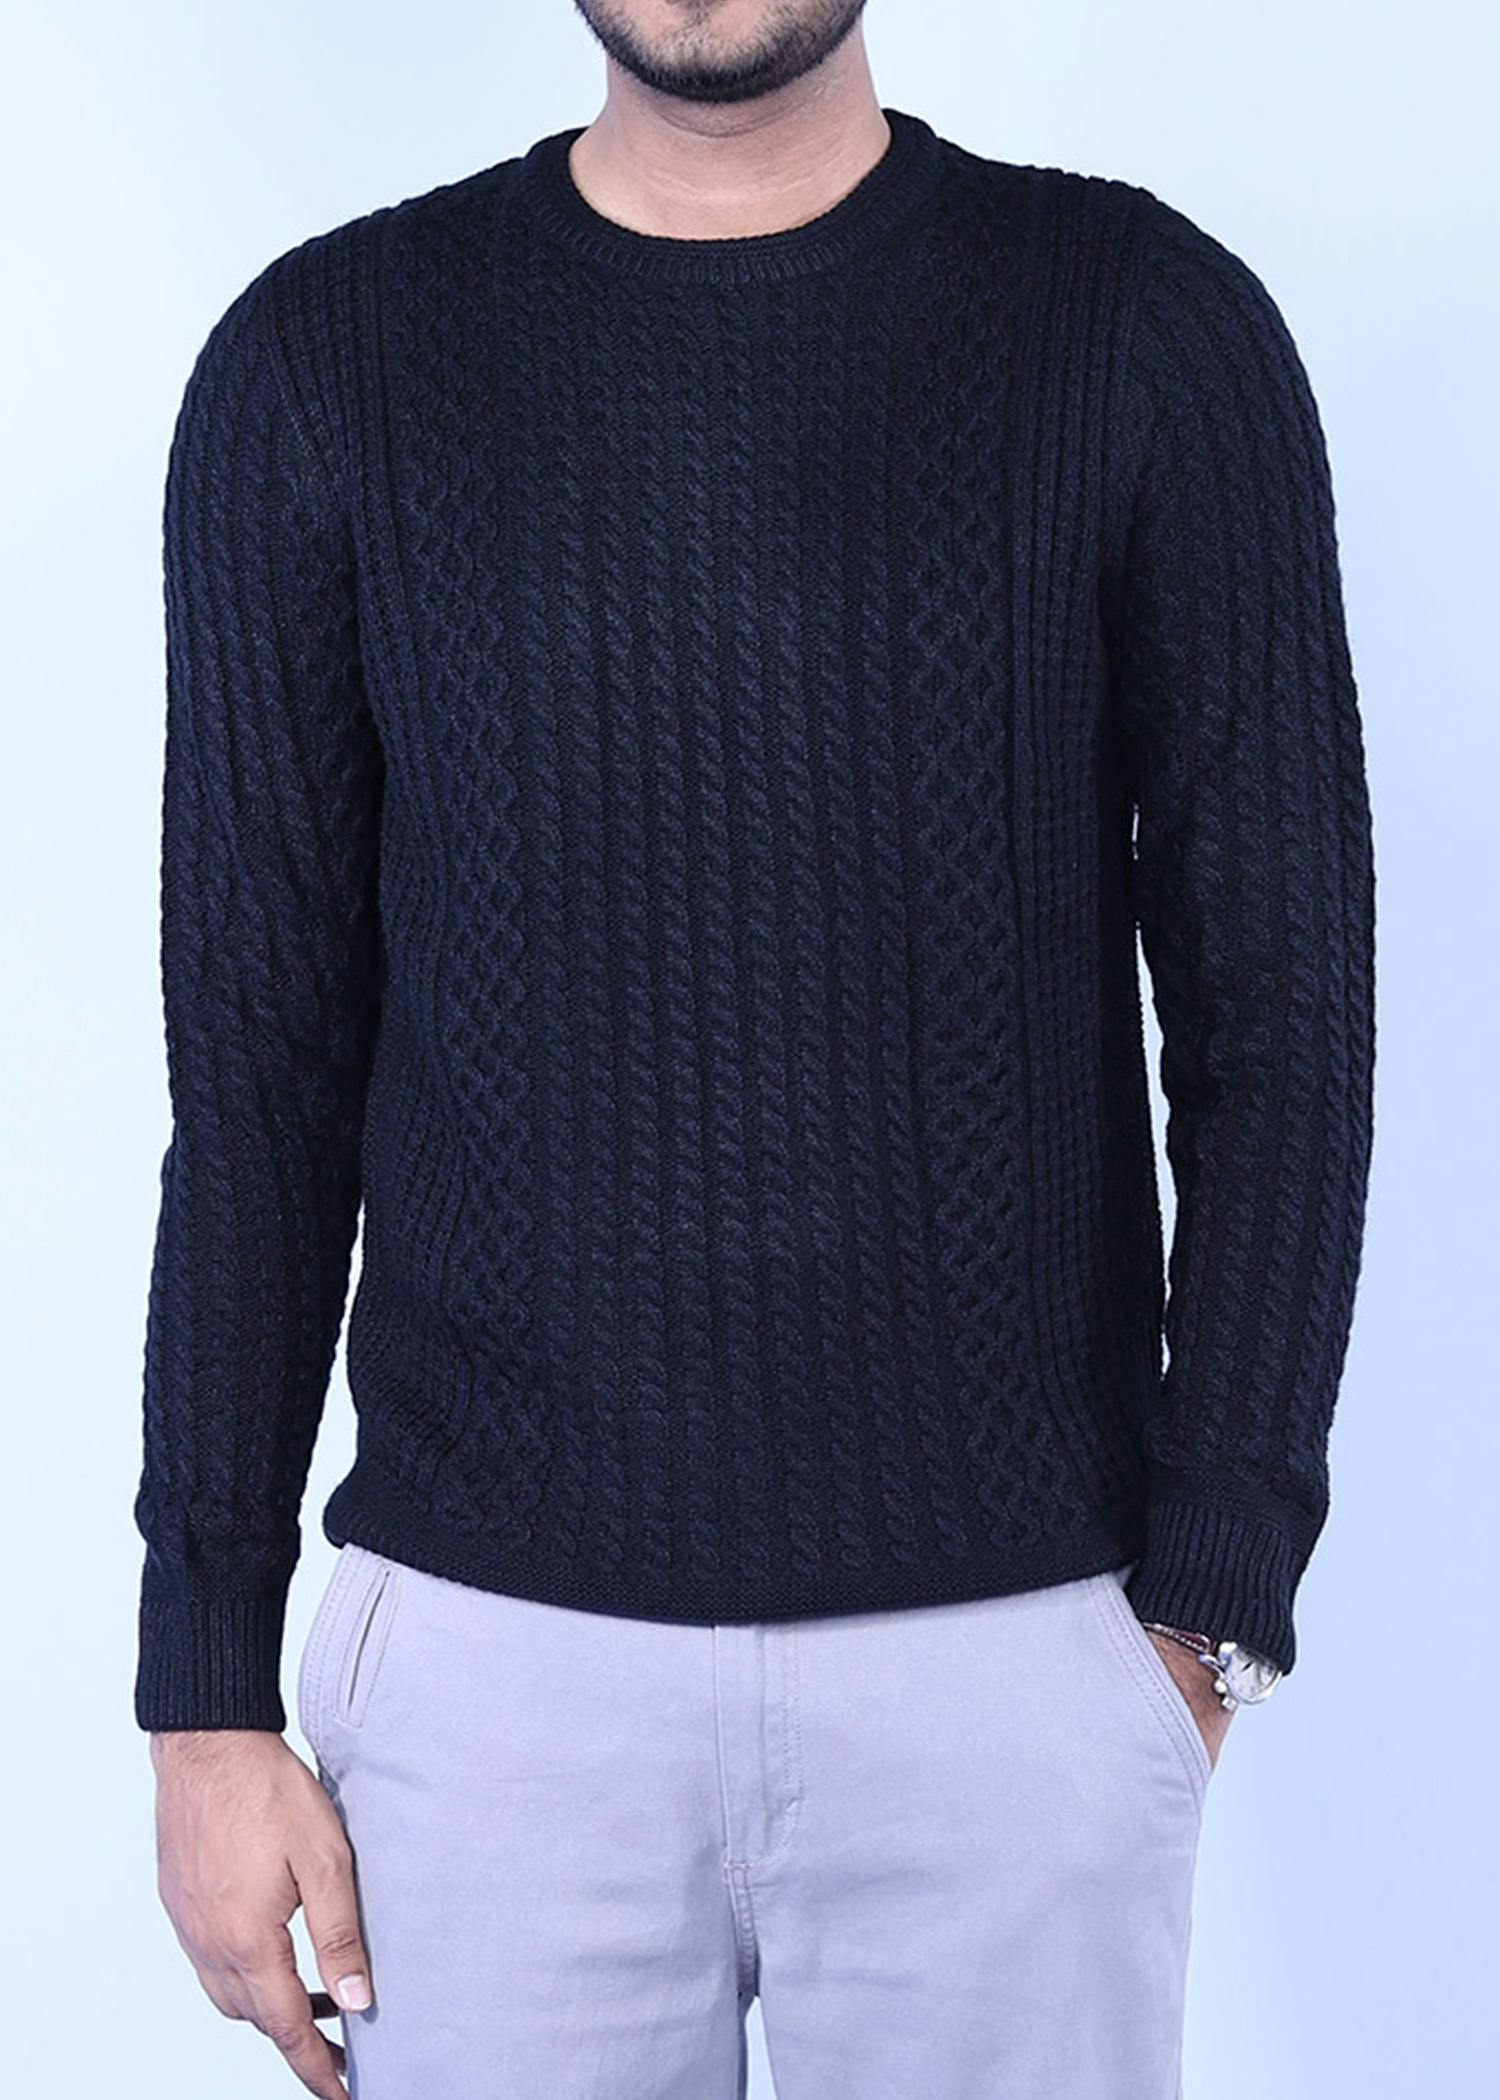 hillstar viii sweater black color headcropped